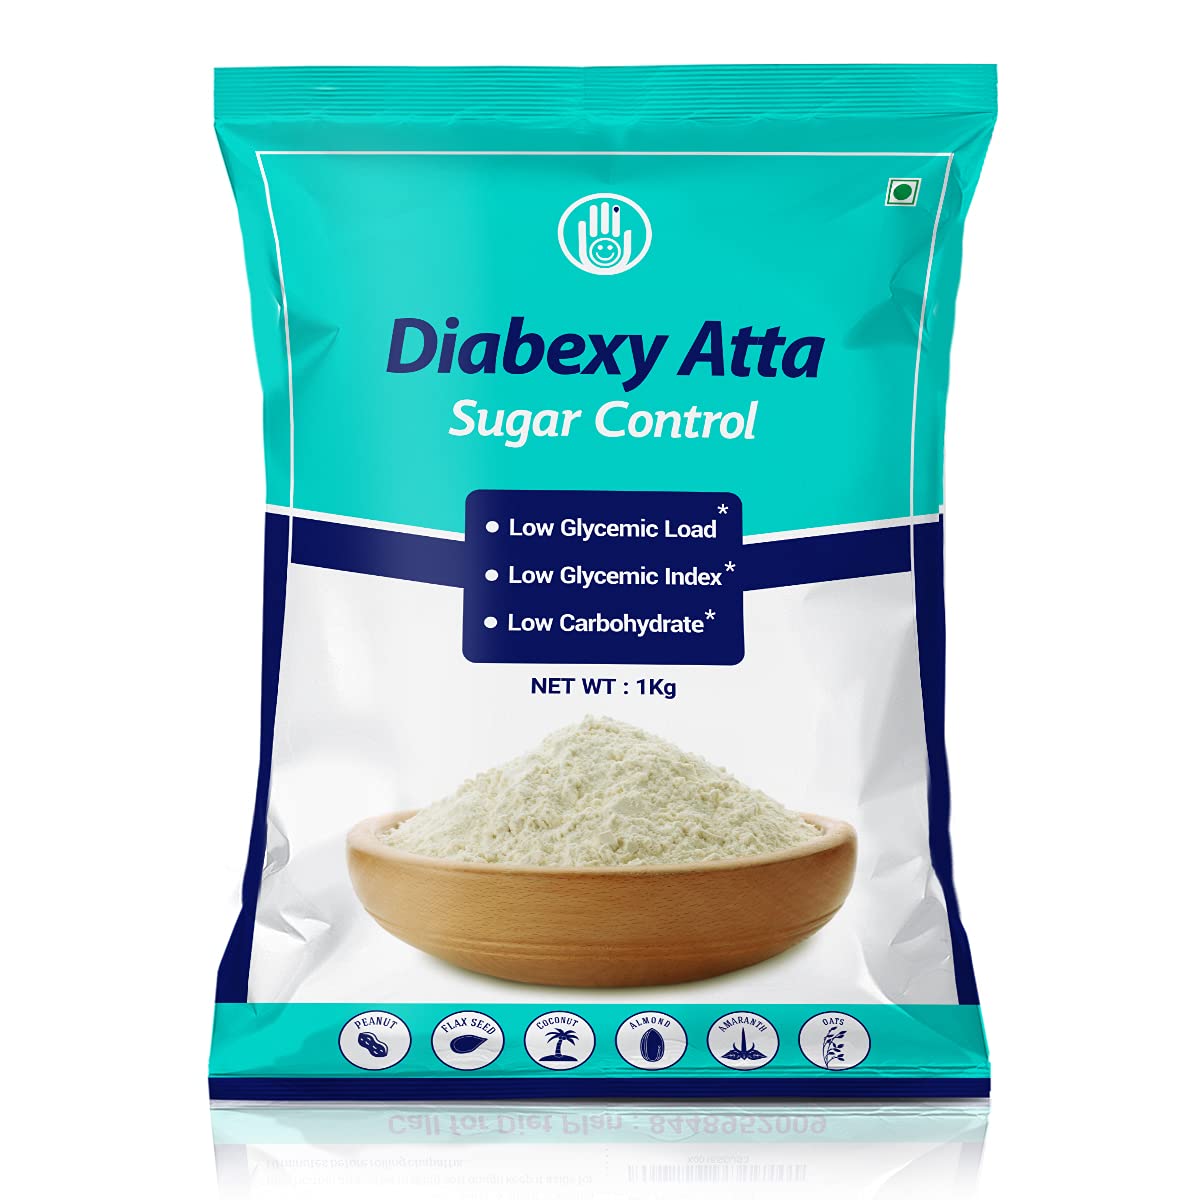 Diabexy Atta Sugar Control Image